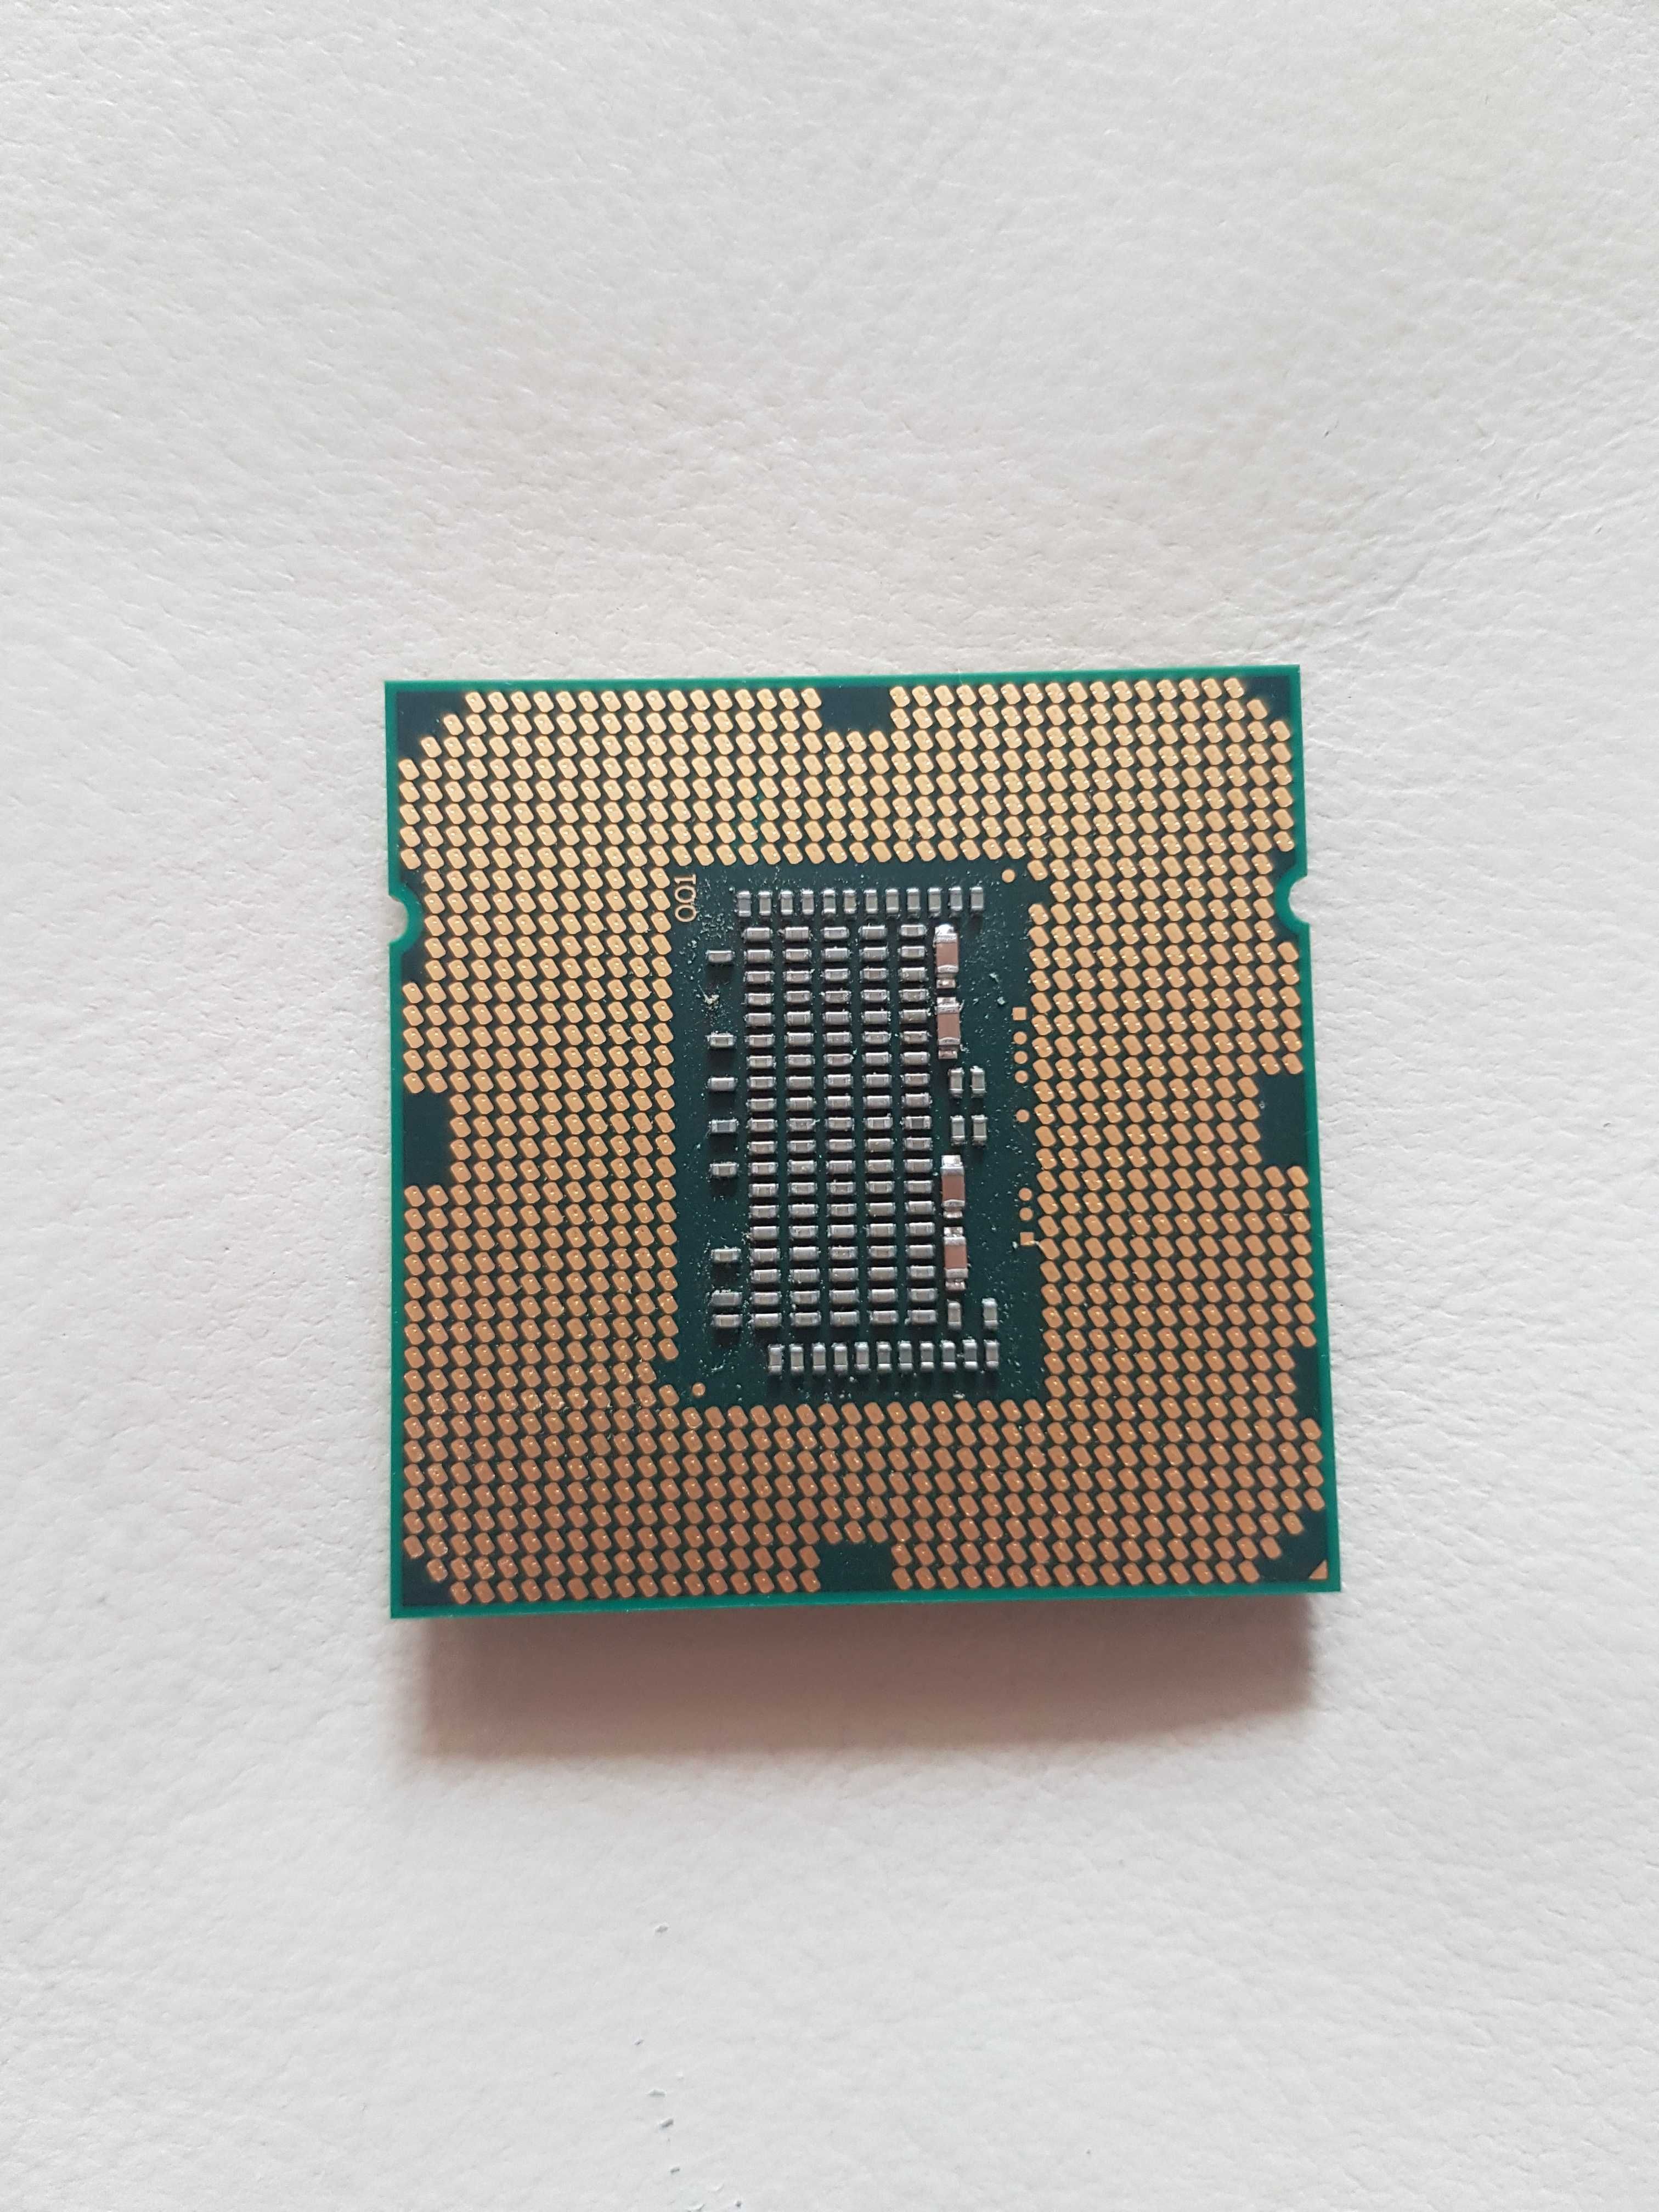 Intel Core i5-760 2.8GHz, 8MB, Socket 1156